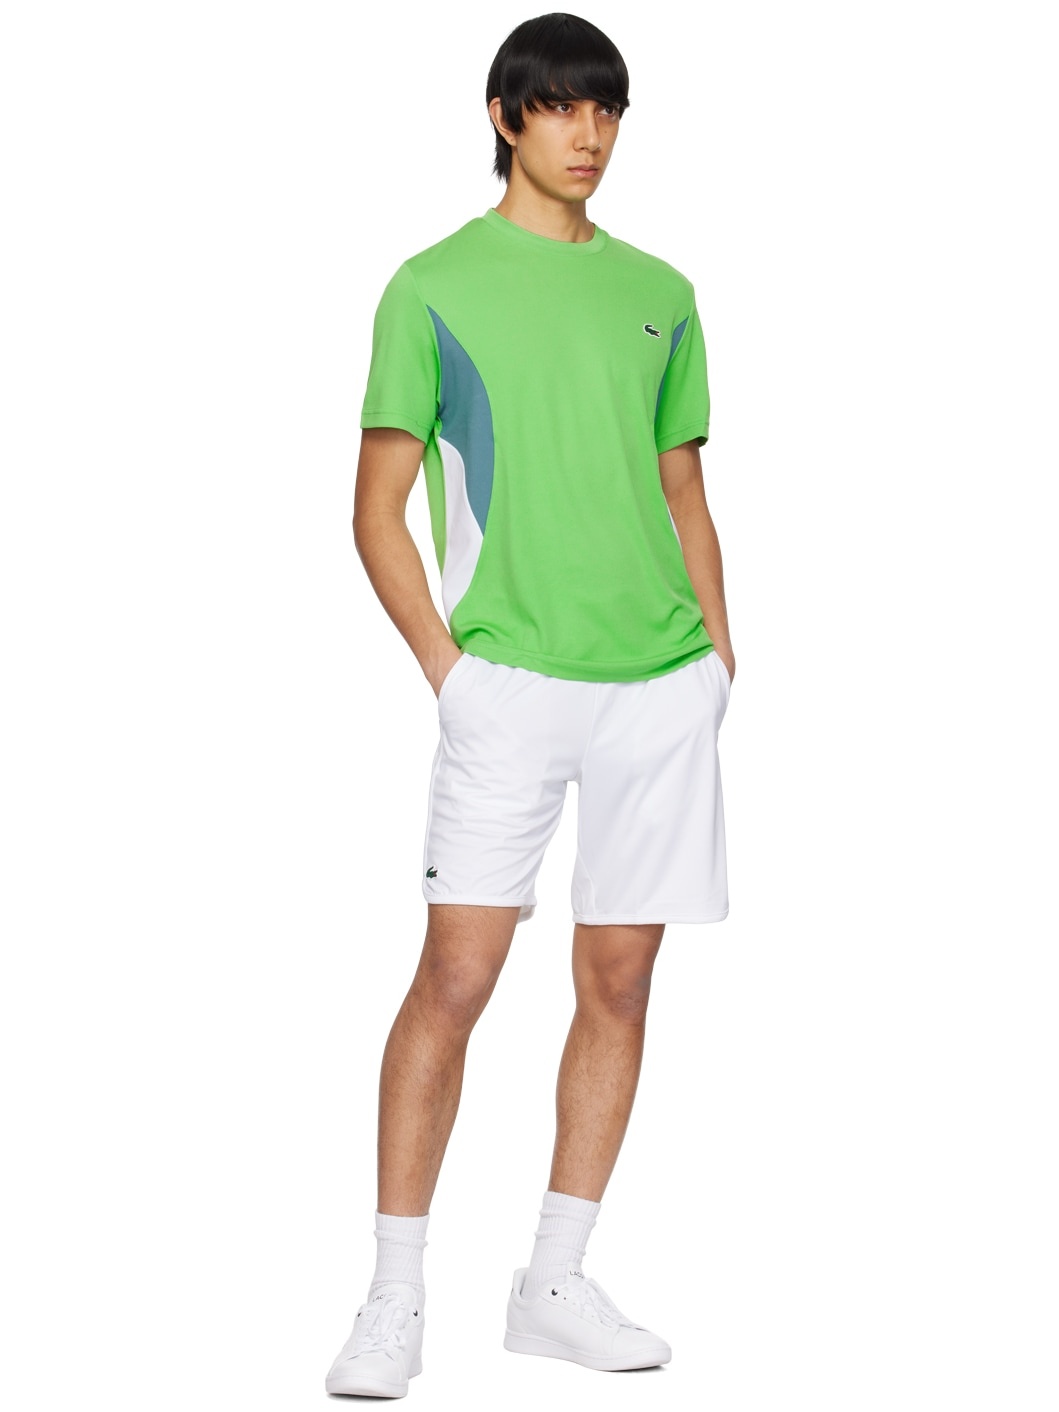 Green Novak Djokovic Edition T-Shirt - 4